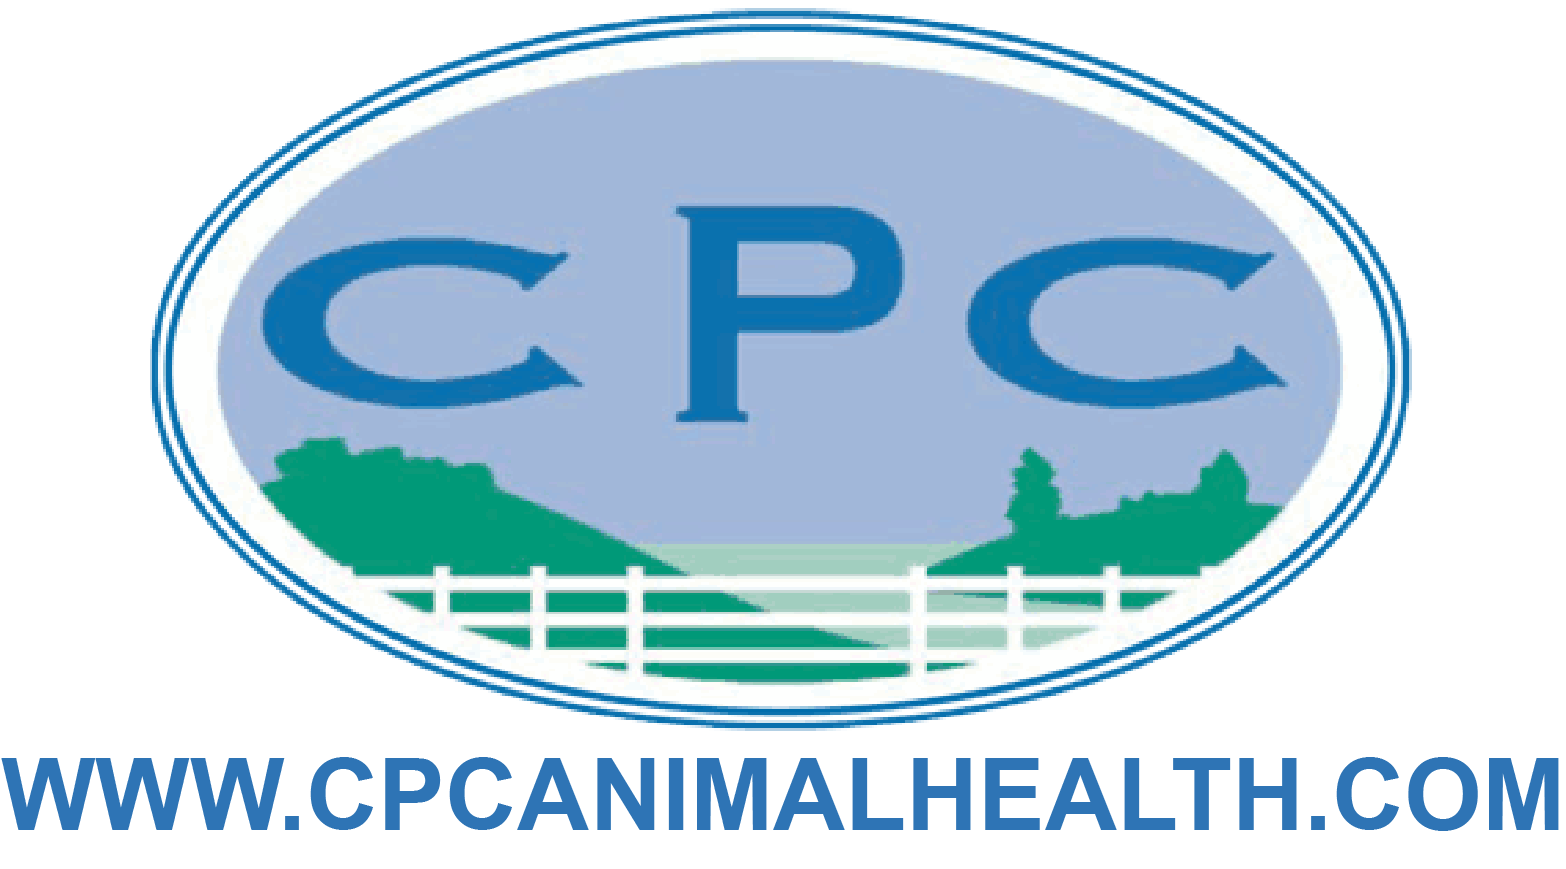 CPC Animal Health - Retailer